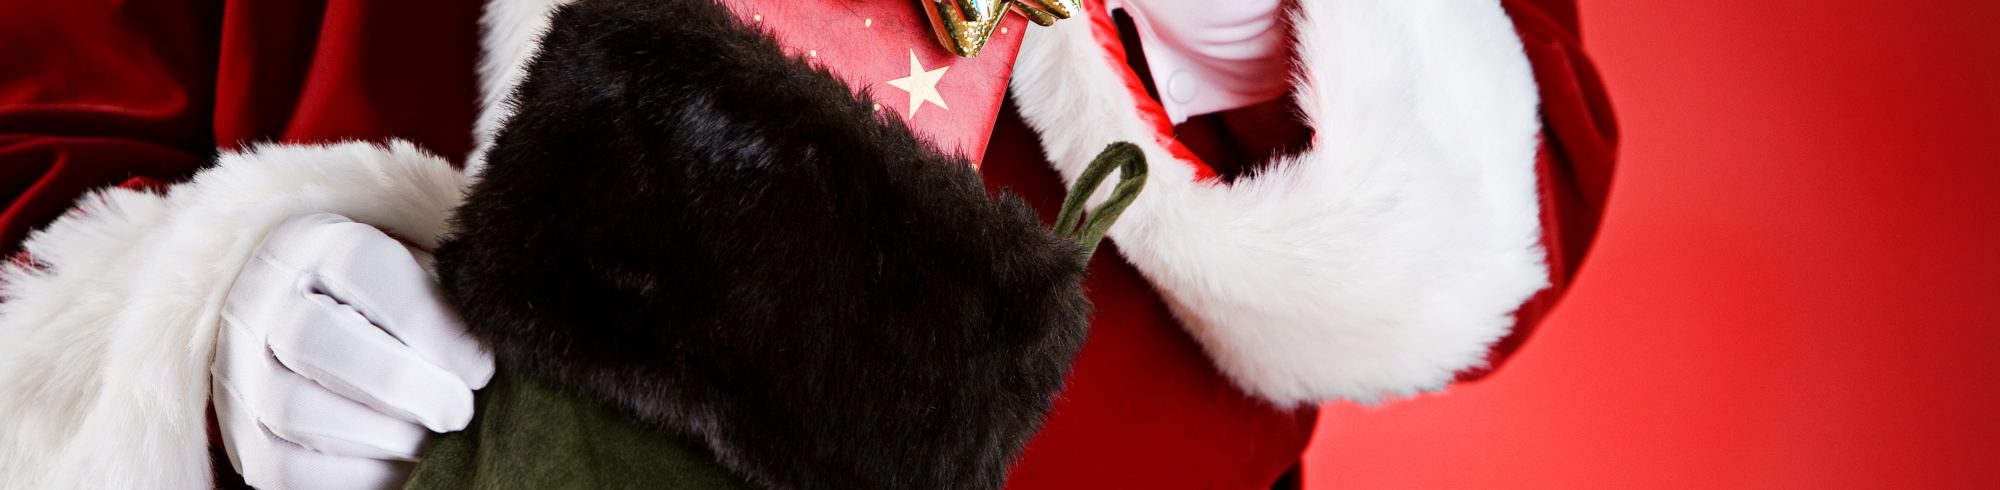 santa putting gift into stocking